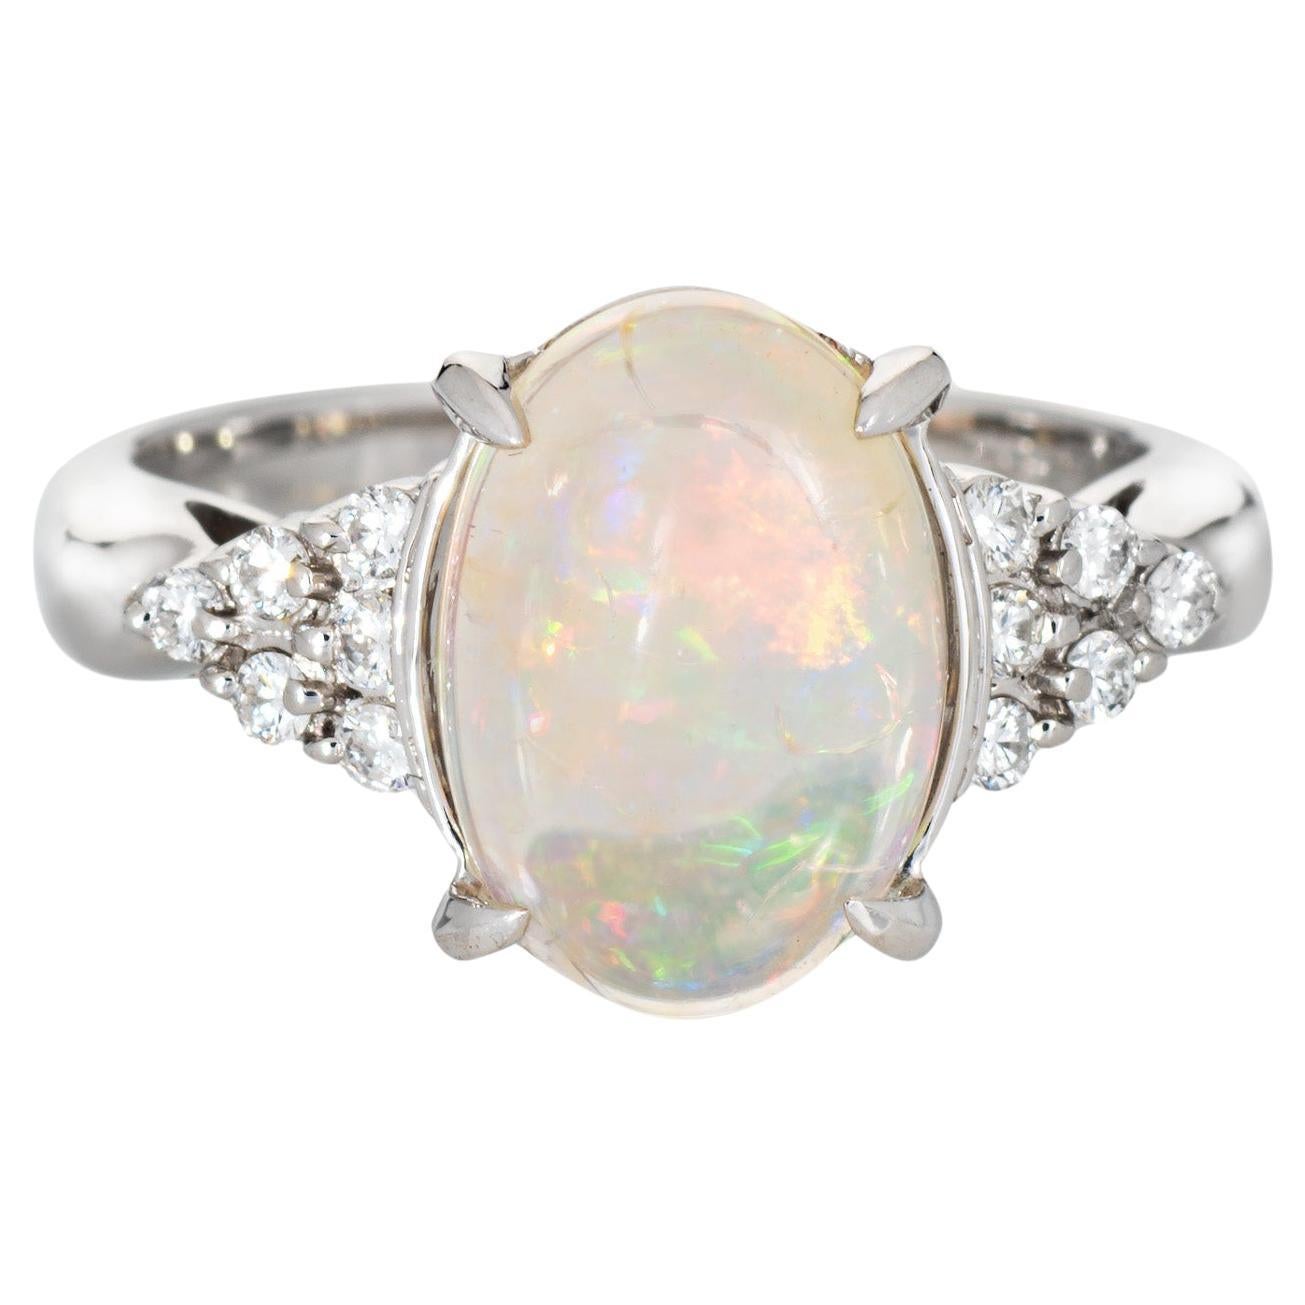 2.25ct Natural Jelly Opal Diamond Ring Platinum Estate Fine Jewelry Sz 6.5